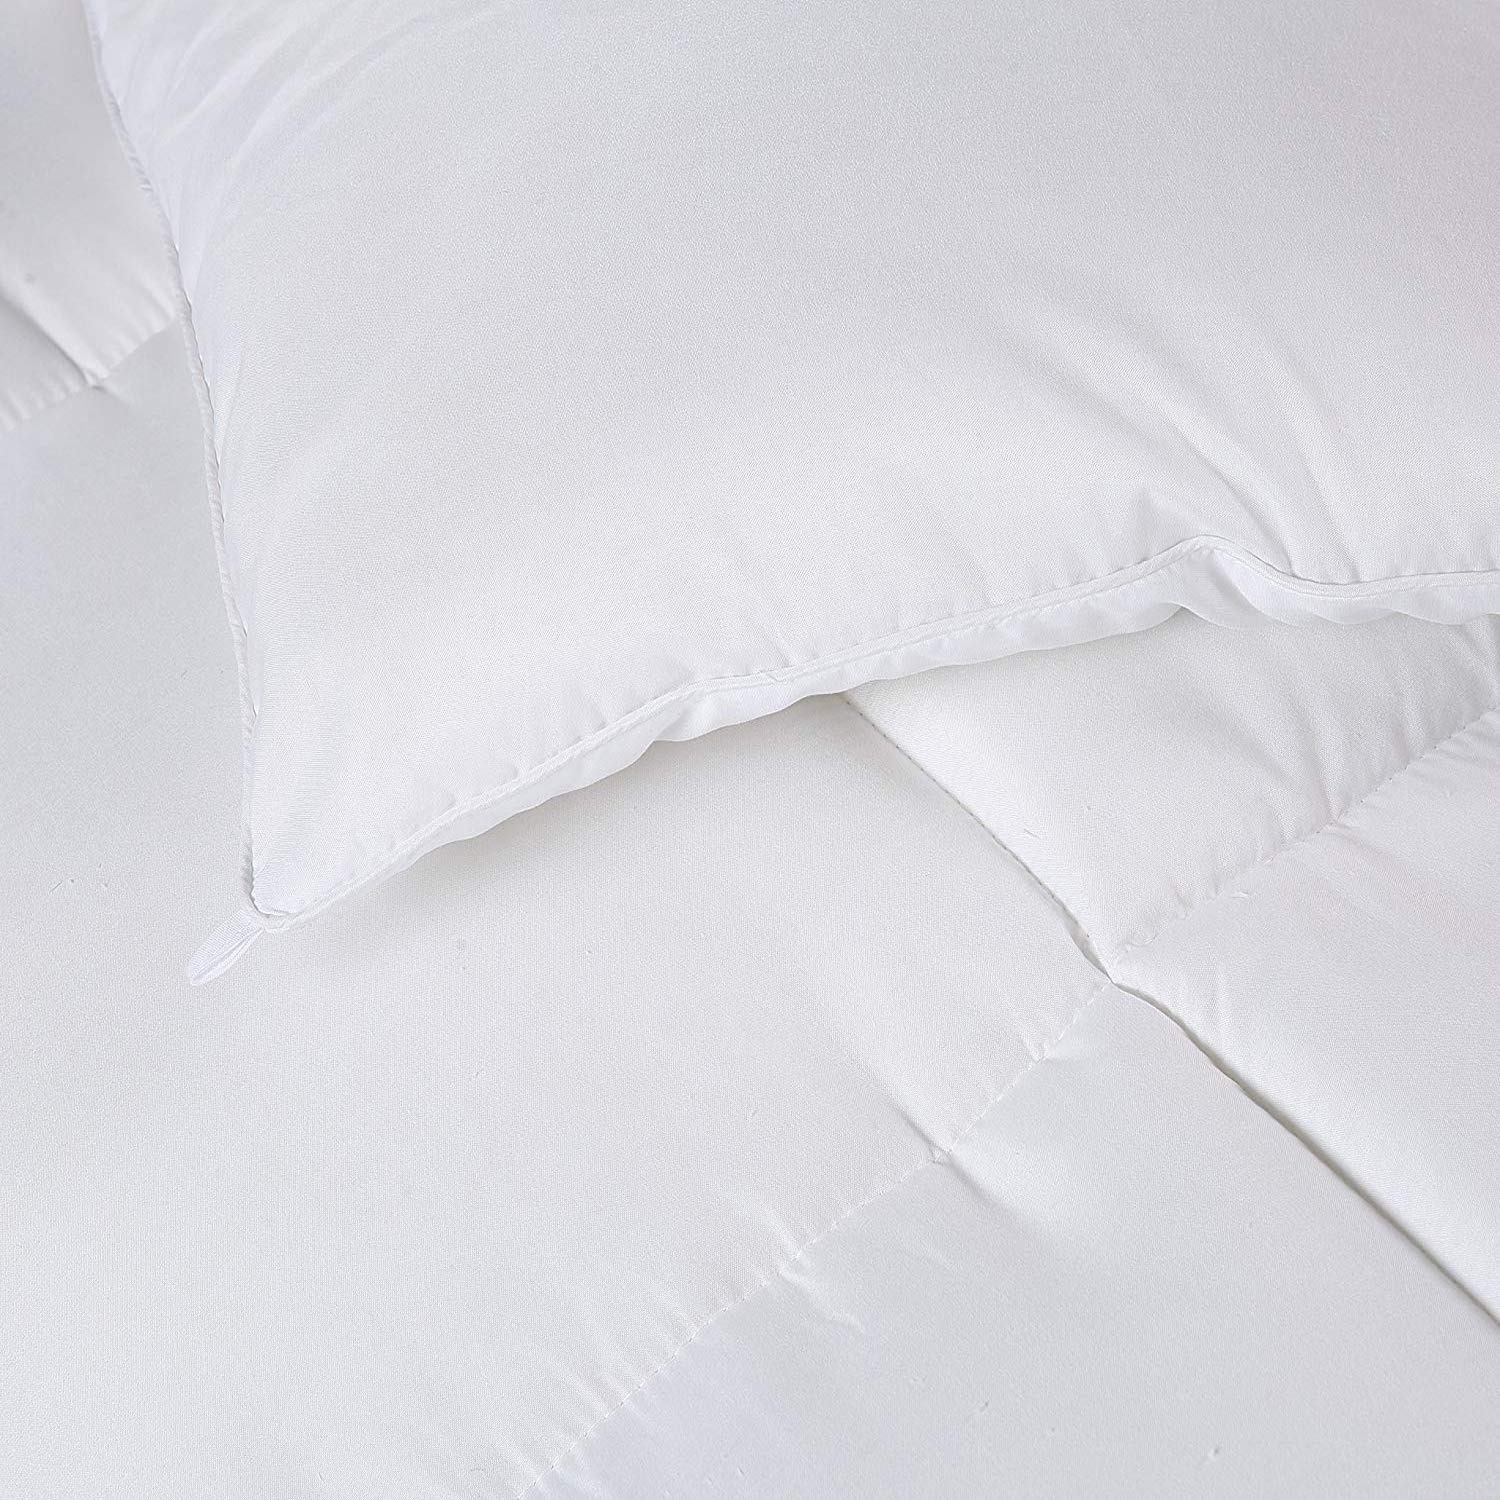 Utopia Bedding Comforter Duvet Insert - Quilted Comforter with Corner Tabs - Box Stitched Down Alternative Comforter (Queen White)